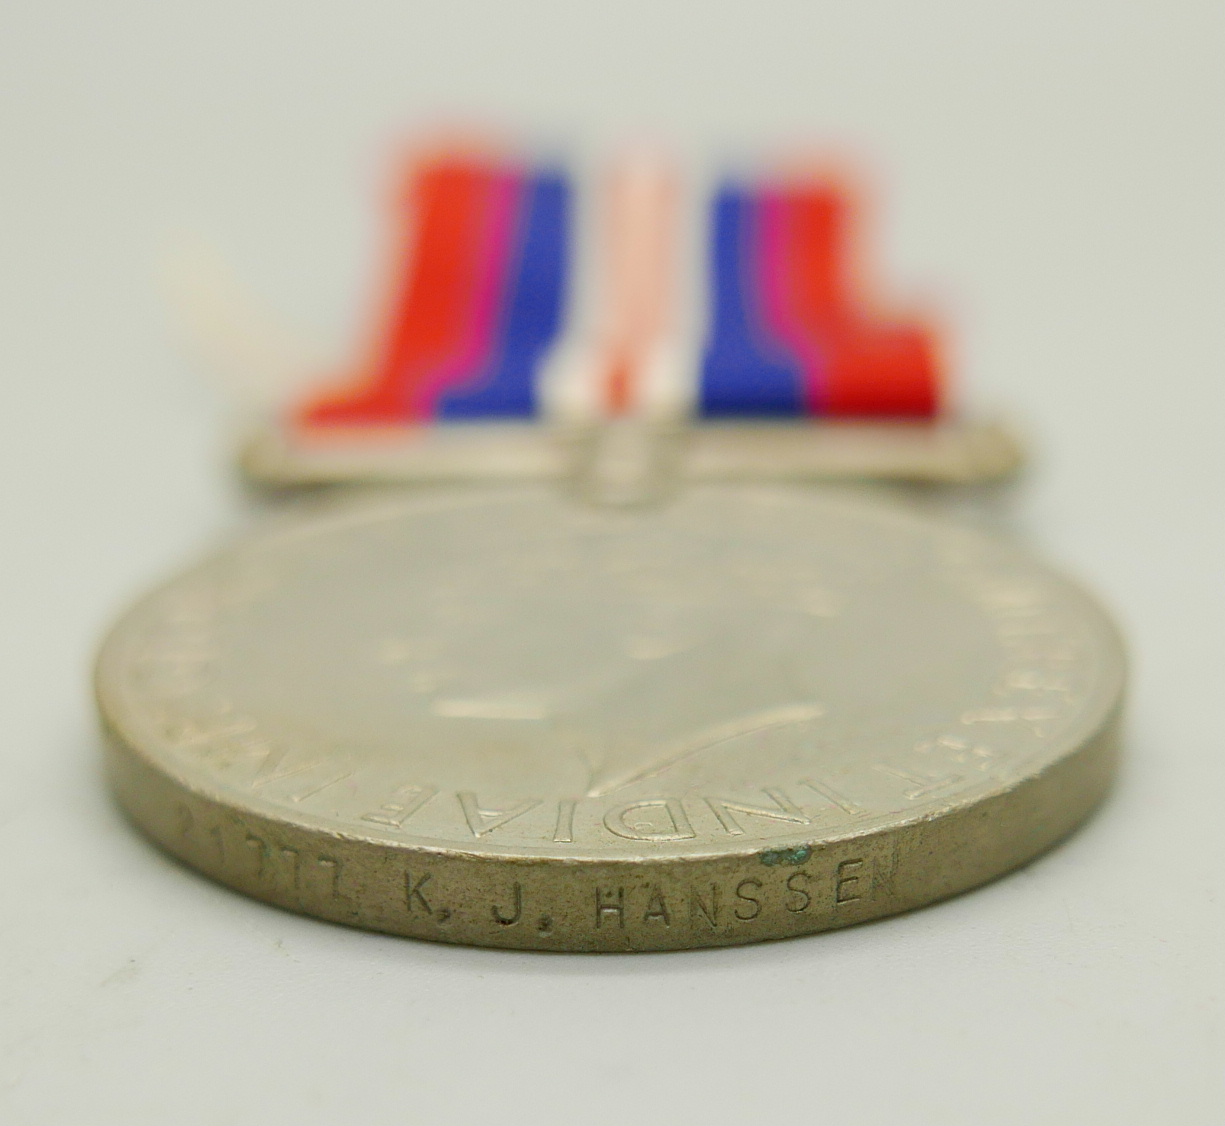 Assorted WWII medals, etc., including four to 21777 K.J. Hanssen with original address envelope - Image 9 of 11